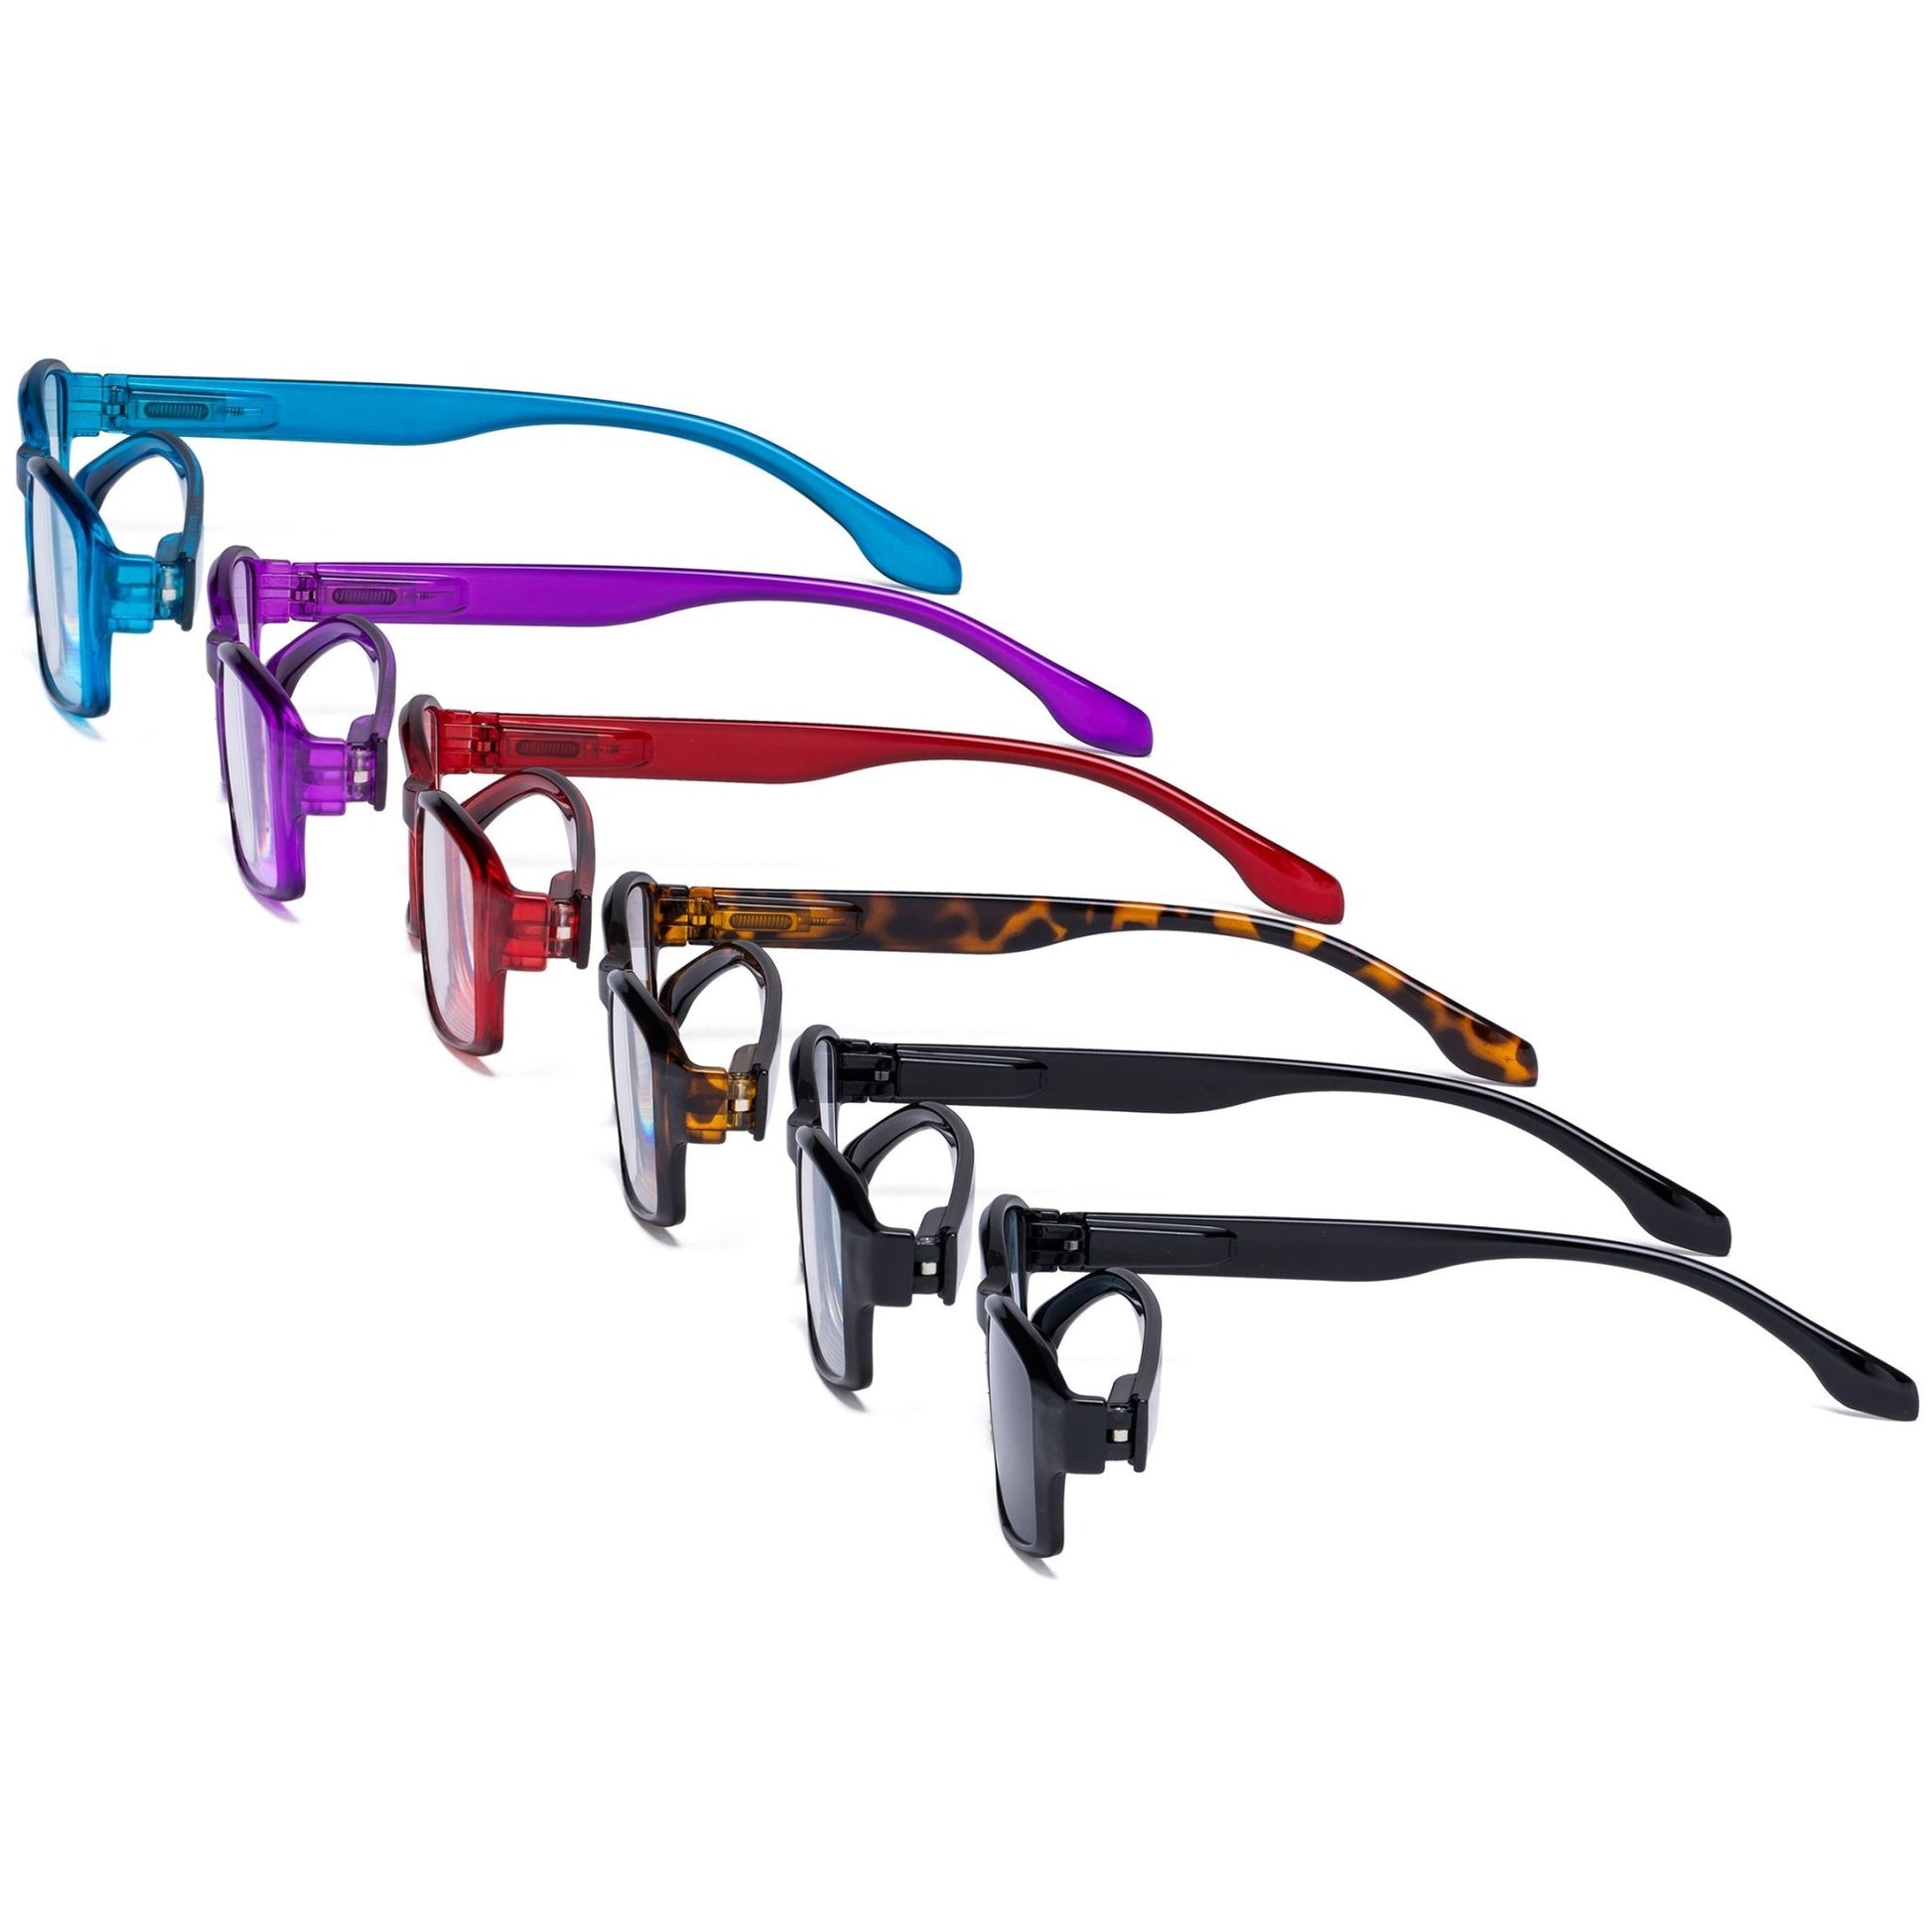 6 Pack Comfort Reading Glasses Include Sunshine Reader R9102